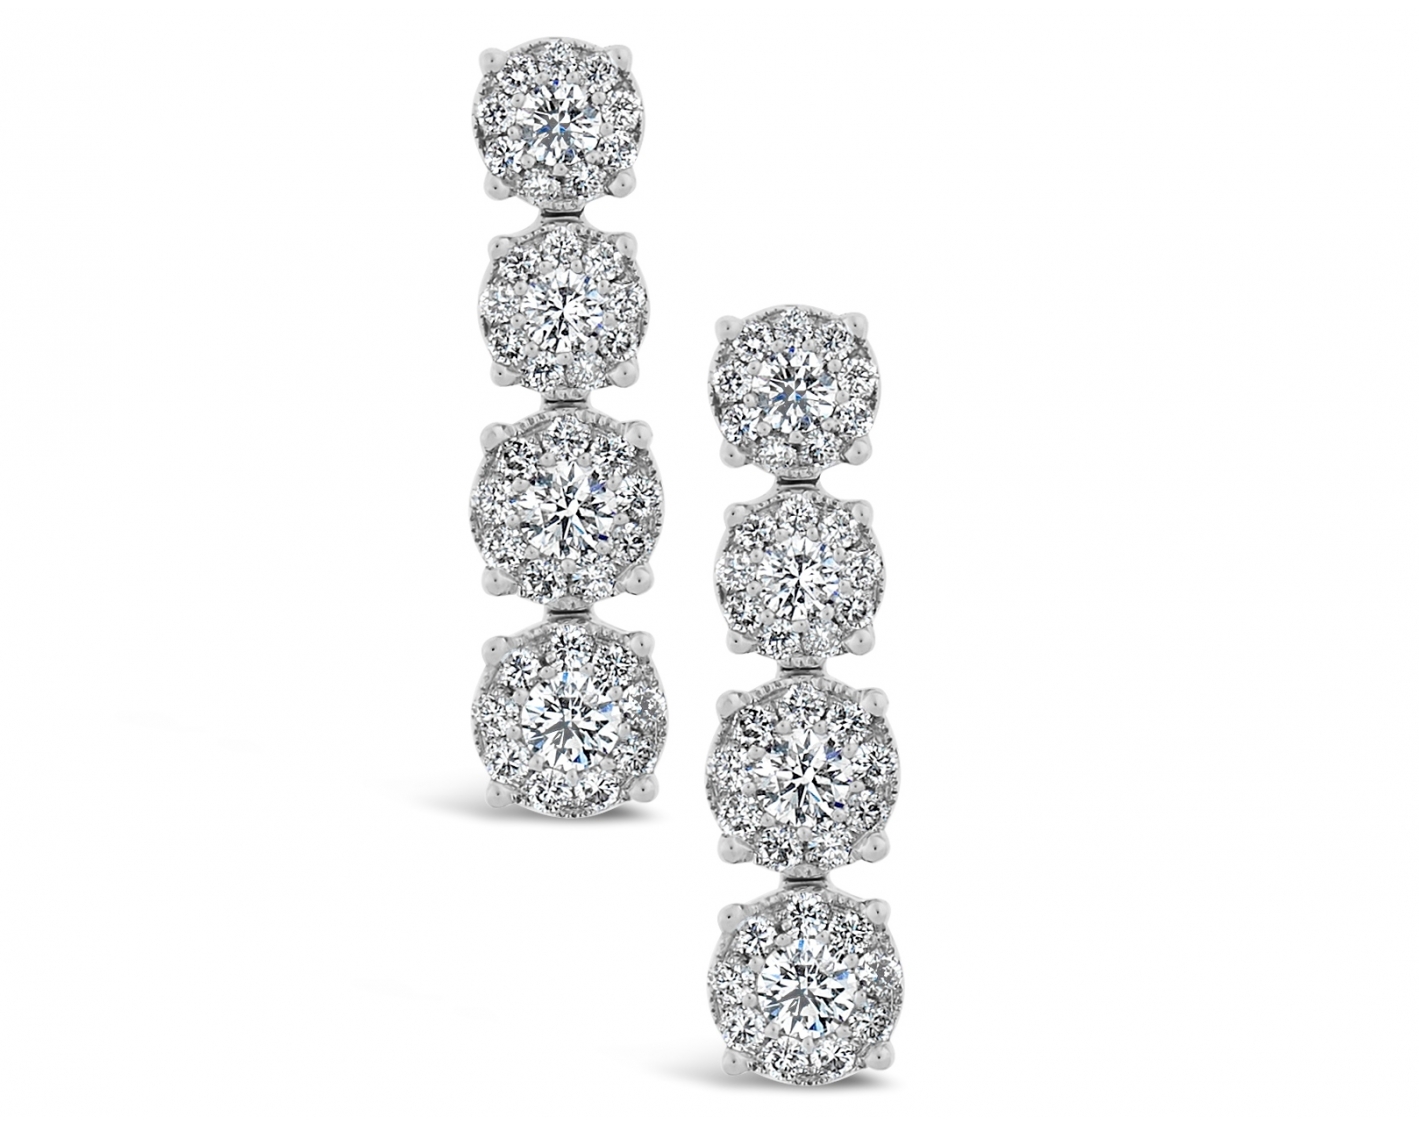 18k white gold halo illusion set hanging diamond earrings Photos & images